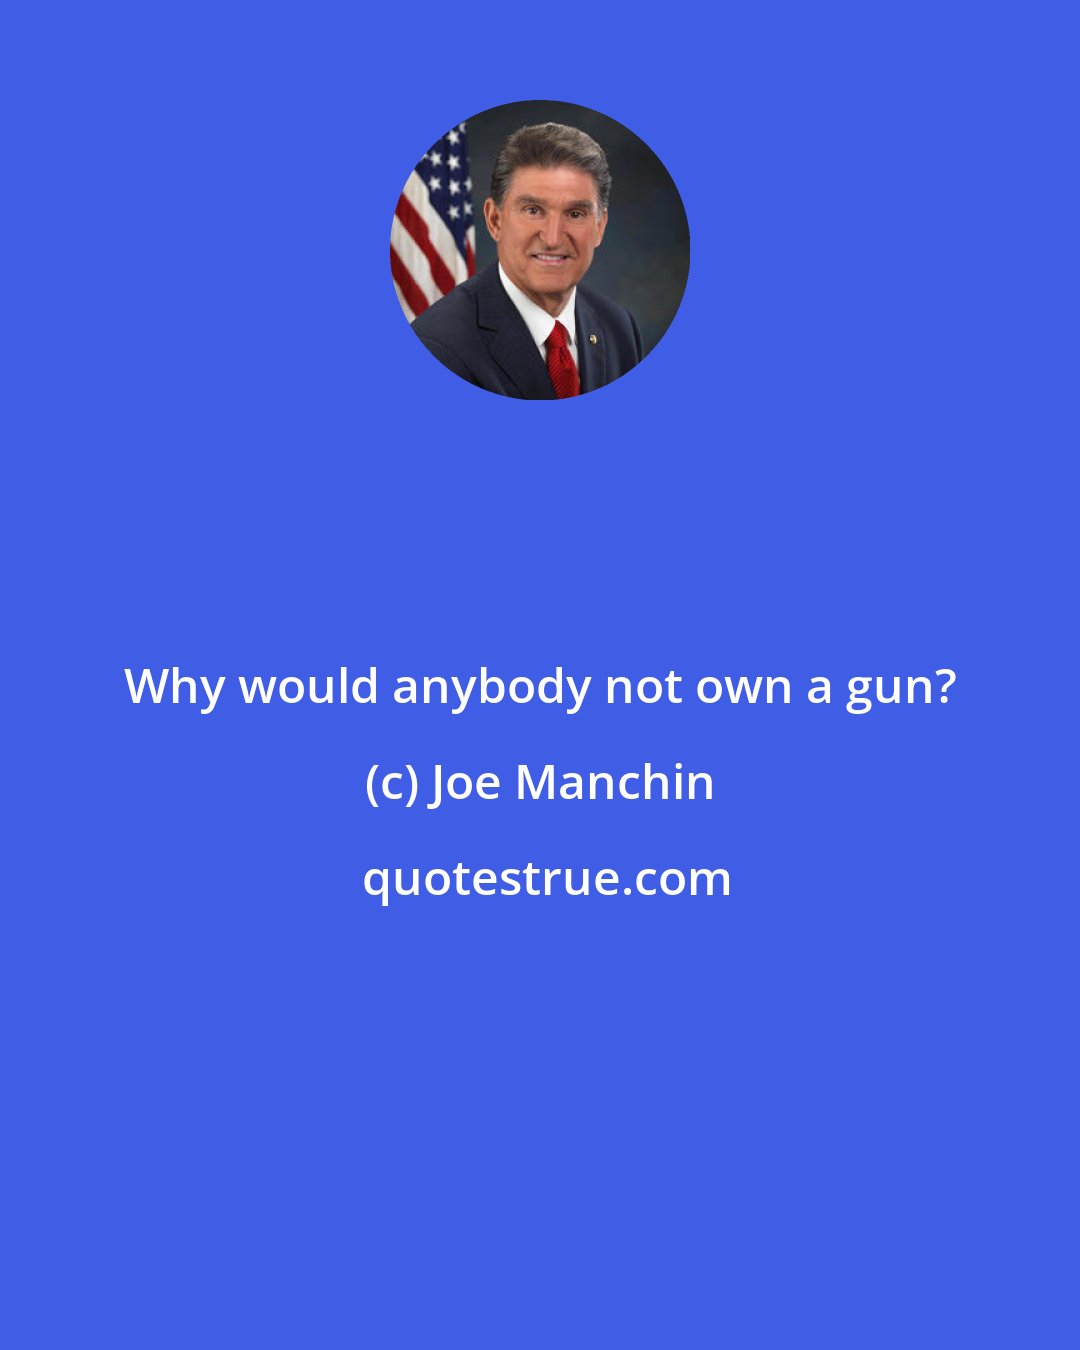 Joe Manchin: Why would anybody not own a gun?